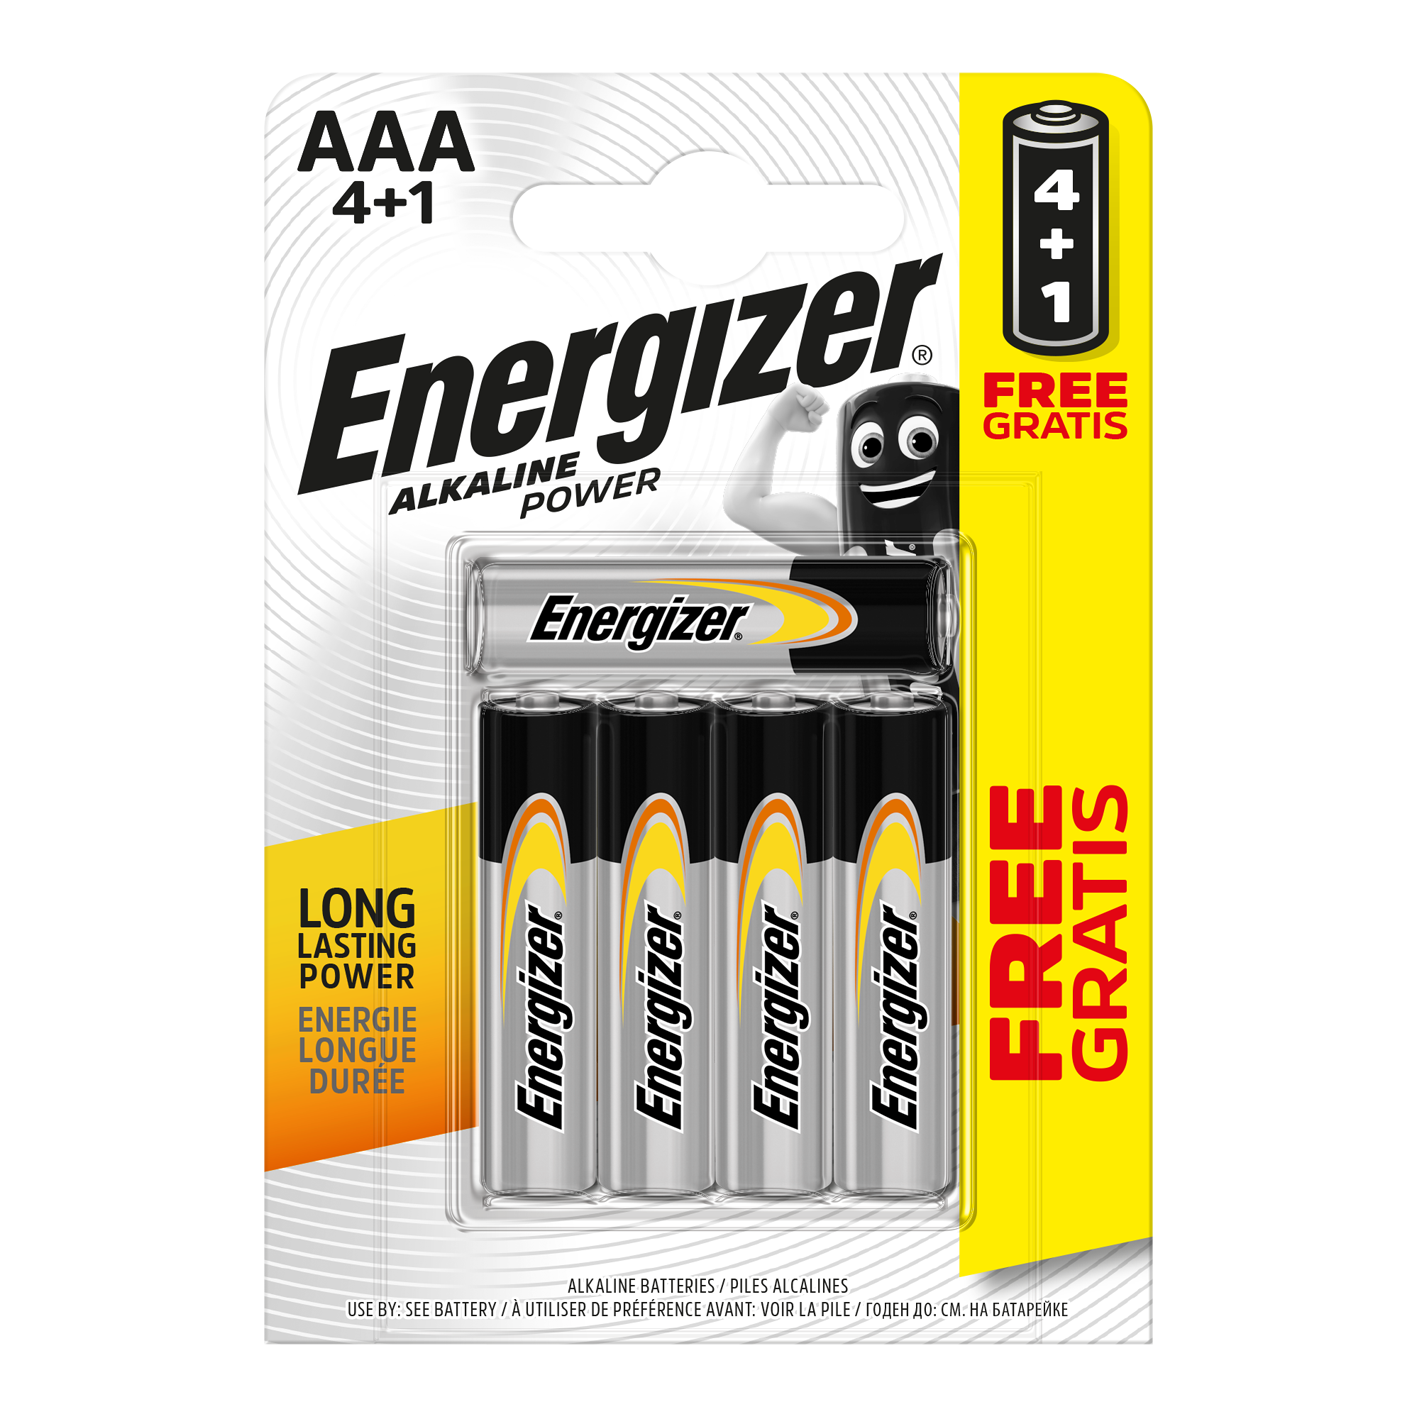 Energizer AAA Alkaline Power, Pack of 4+1